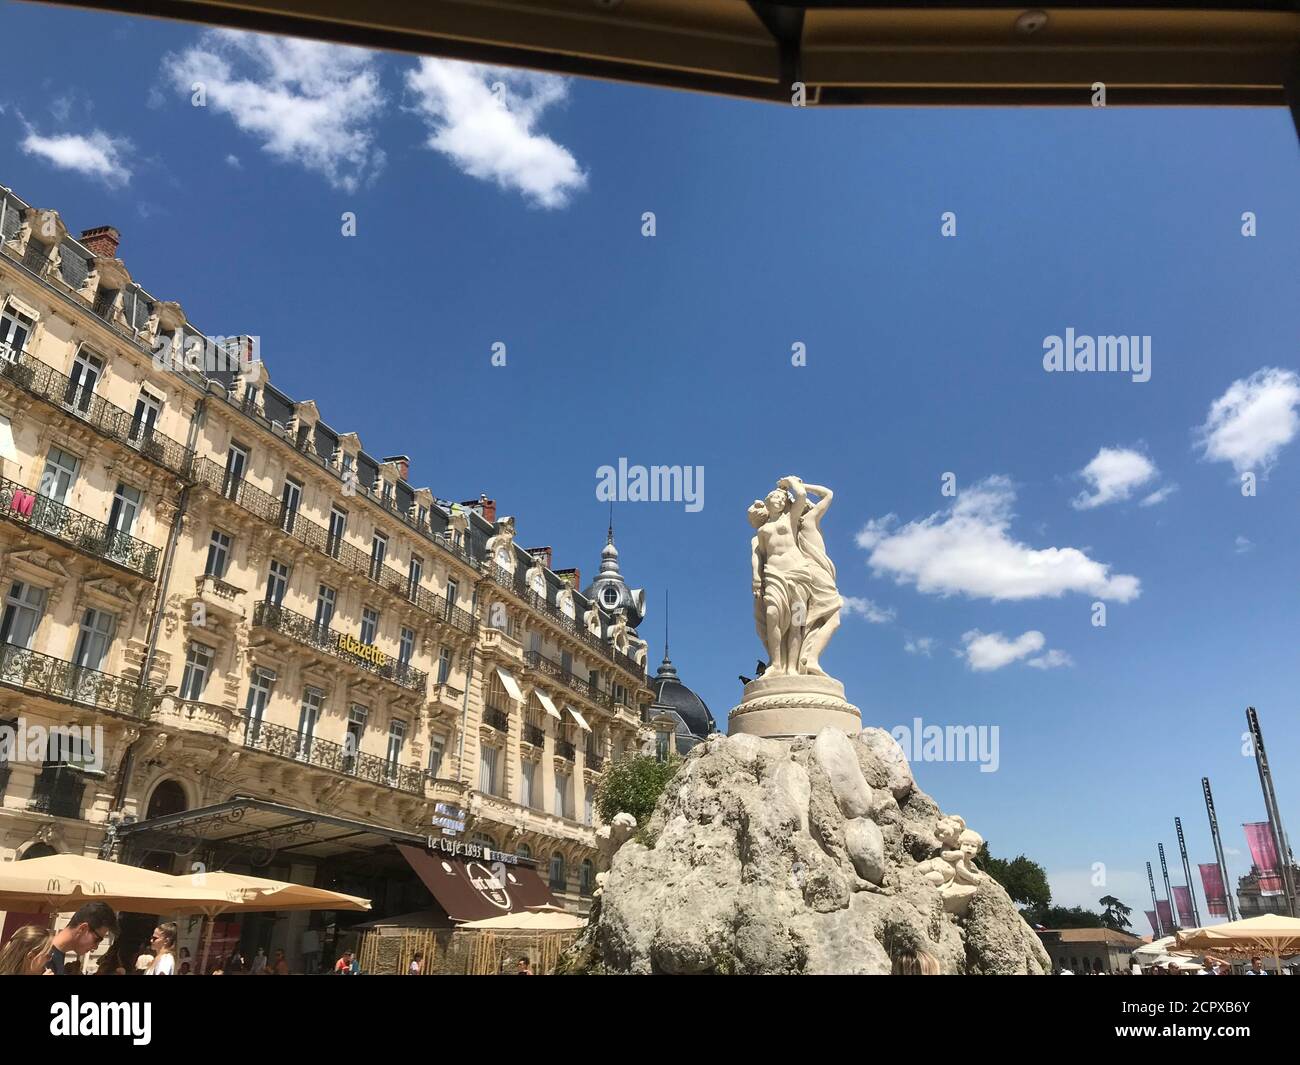 Frankreich, August 07 2019,Fontaine des Trois Graces auf der Place de la Comedie in Montpellier, Frankreich. Straßenfotografie. Stockfoto